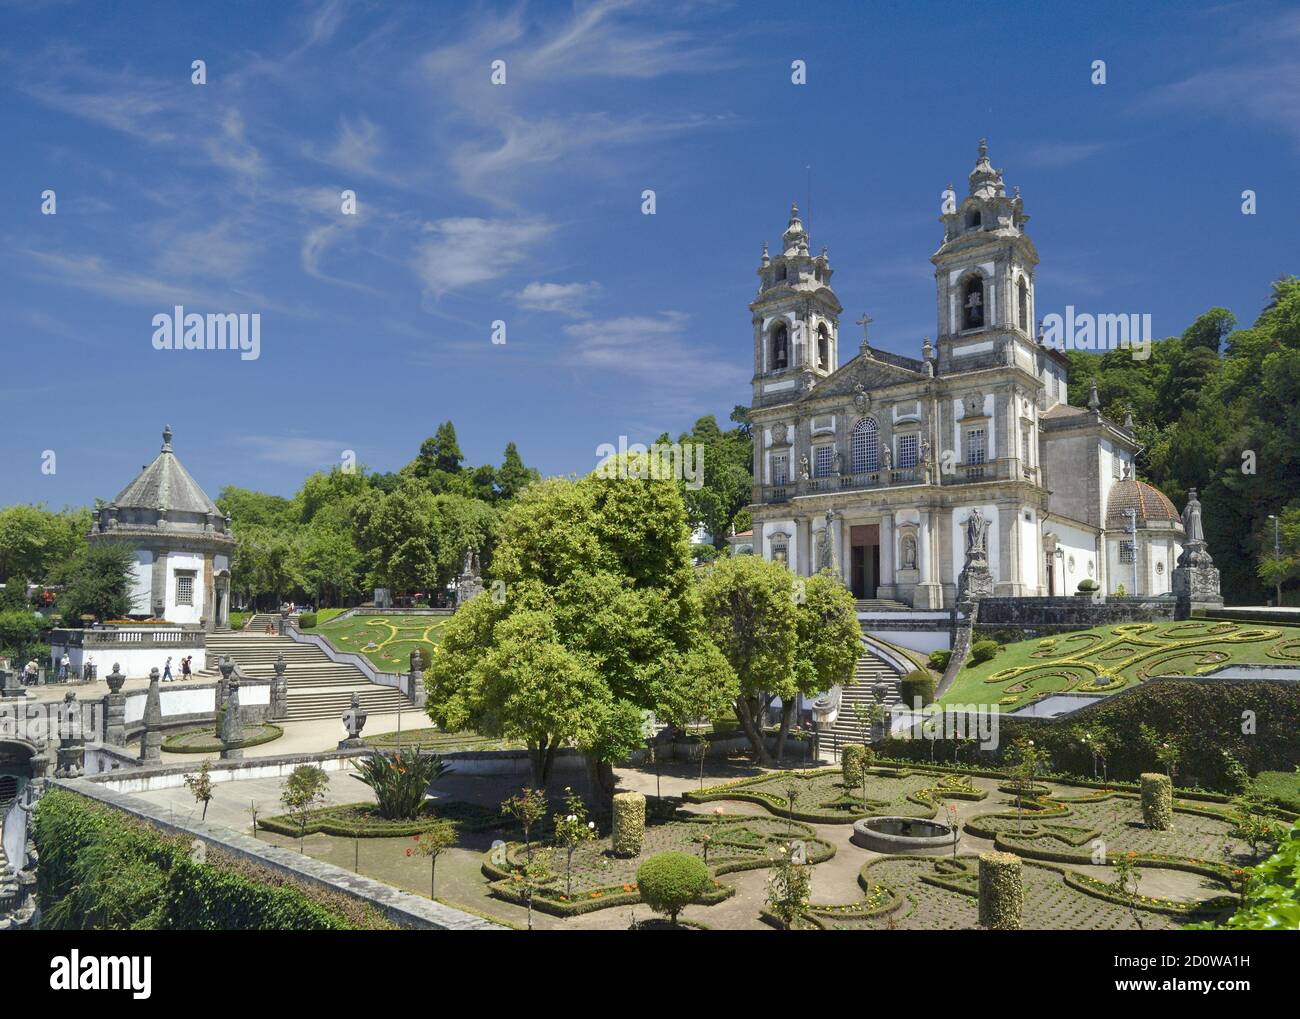 Portugal, Minho dsitrict, Braga, the Bom Jesus do Monte church and ornamental gardens Stock Photo